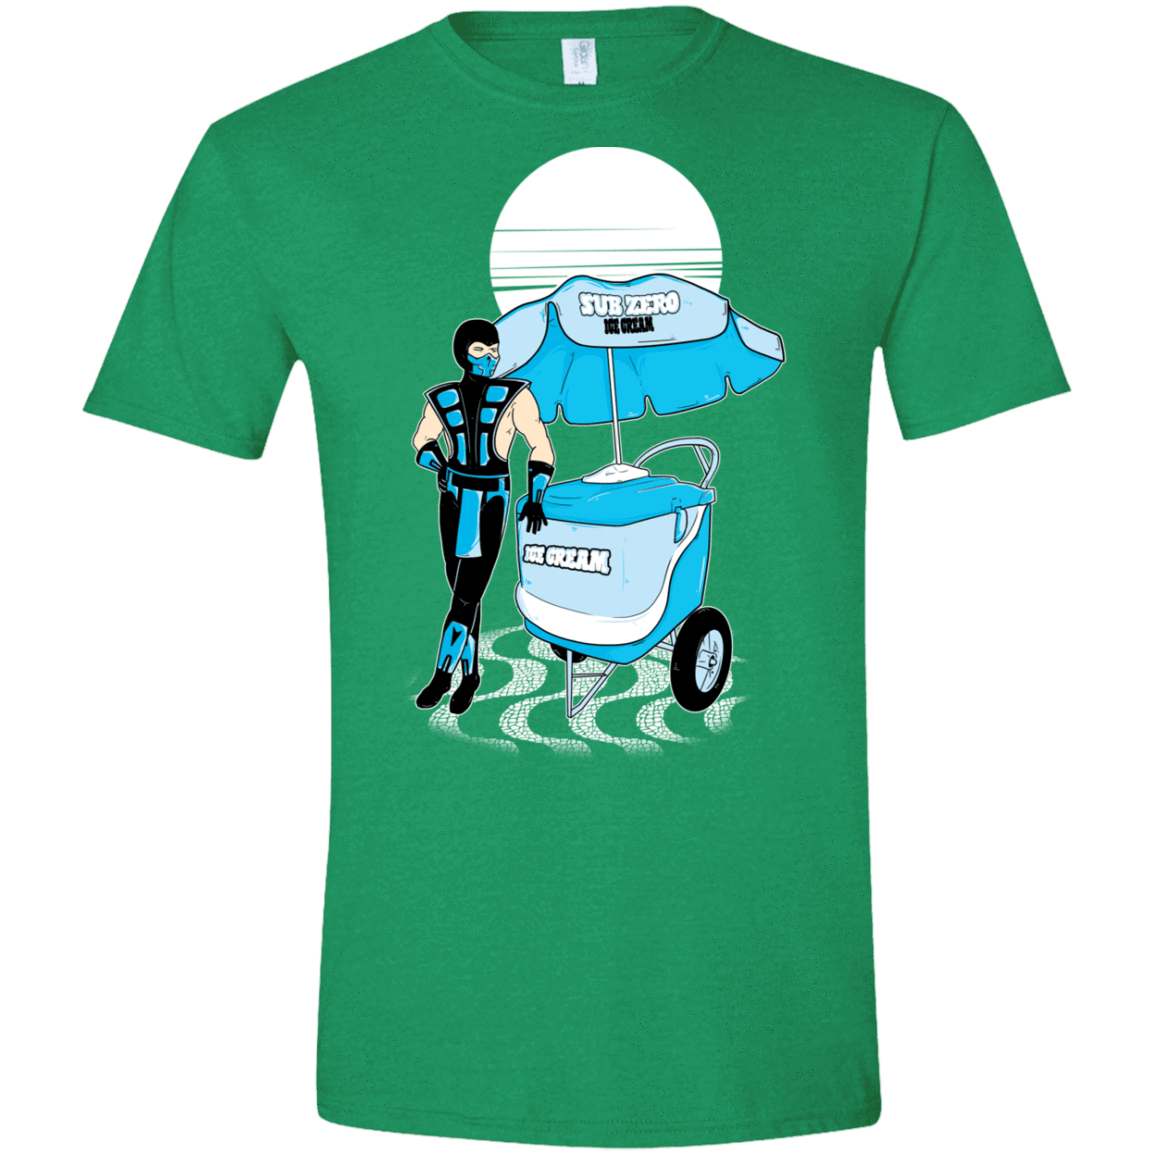 T-Shirts Heather Irish Green / S Sub Zero Ice Cream Men's Semi-Fitted Softstyle